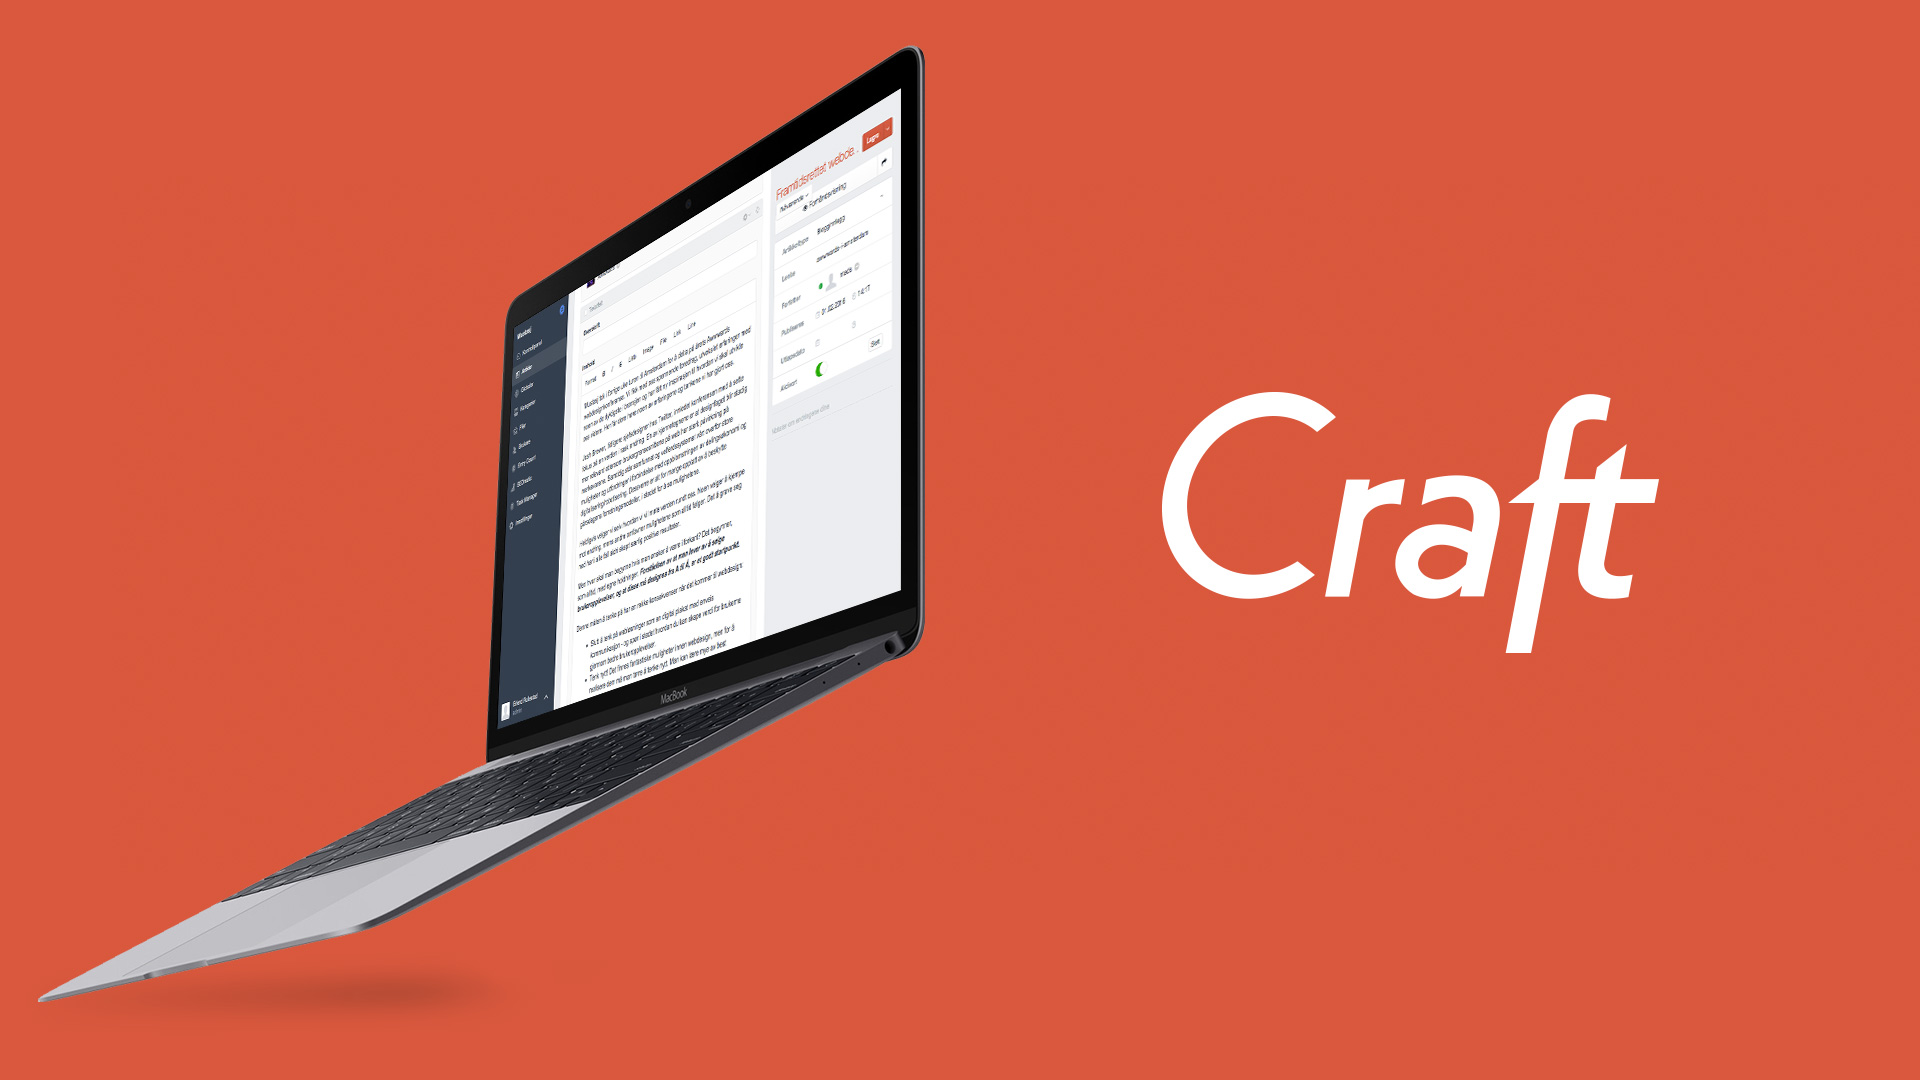 craft cms web developer